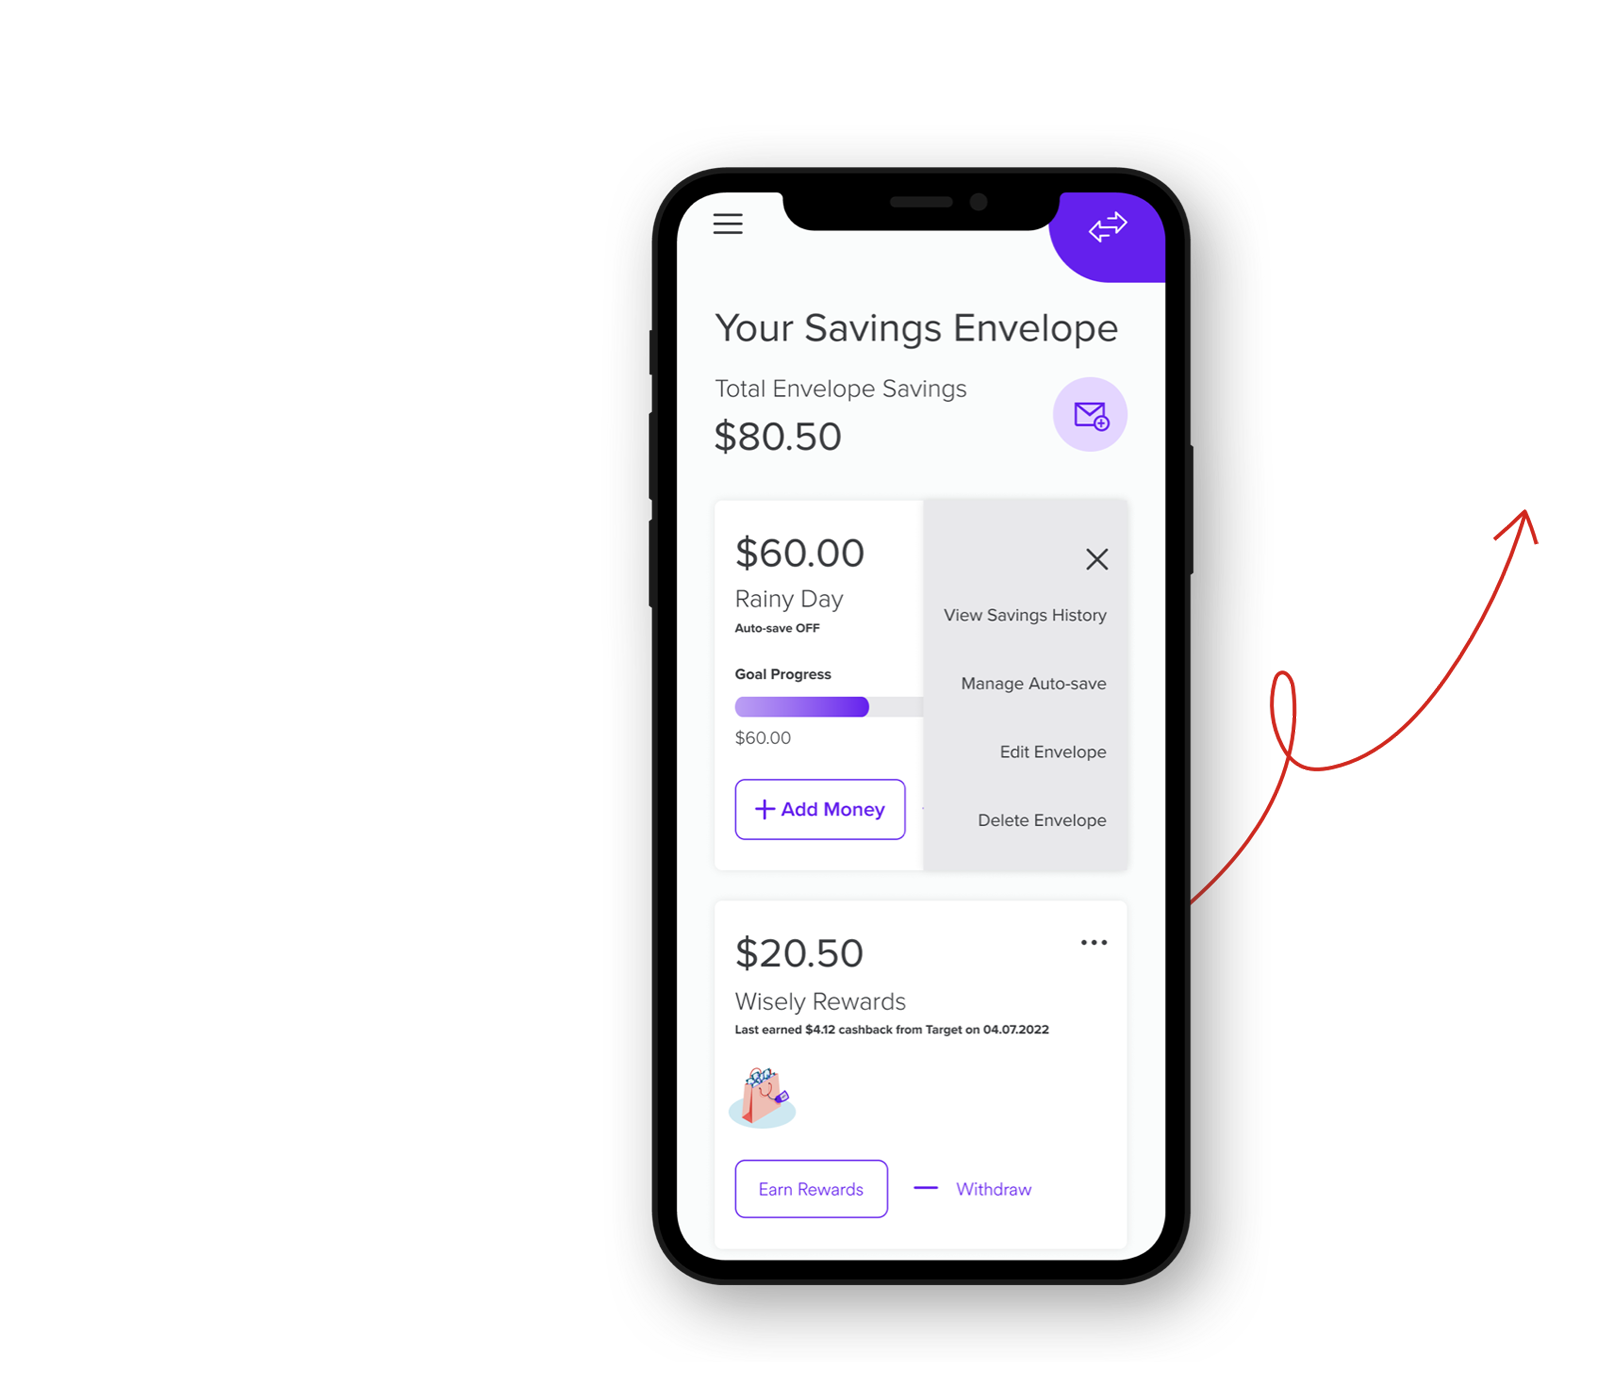 Phone screen shows Savings Envelope balance in myWisely app.